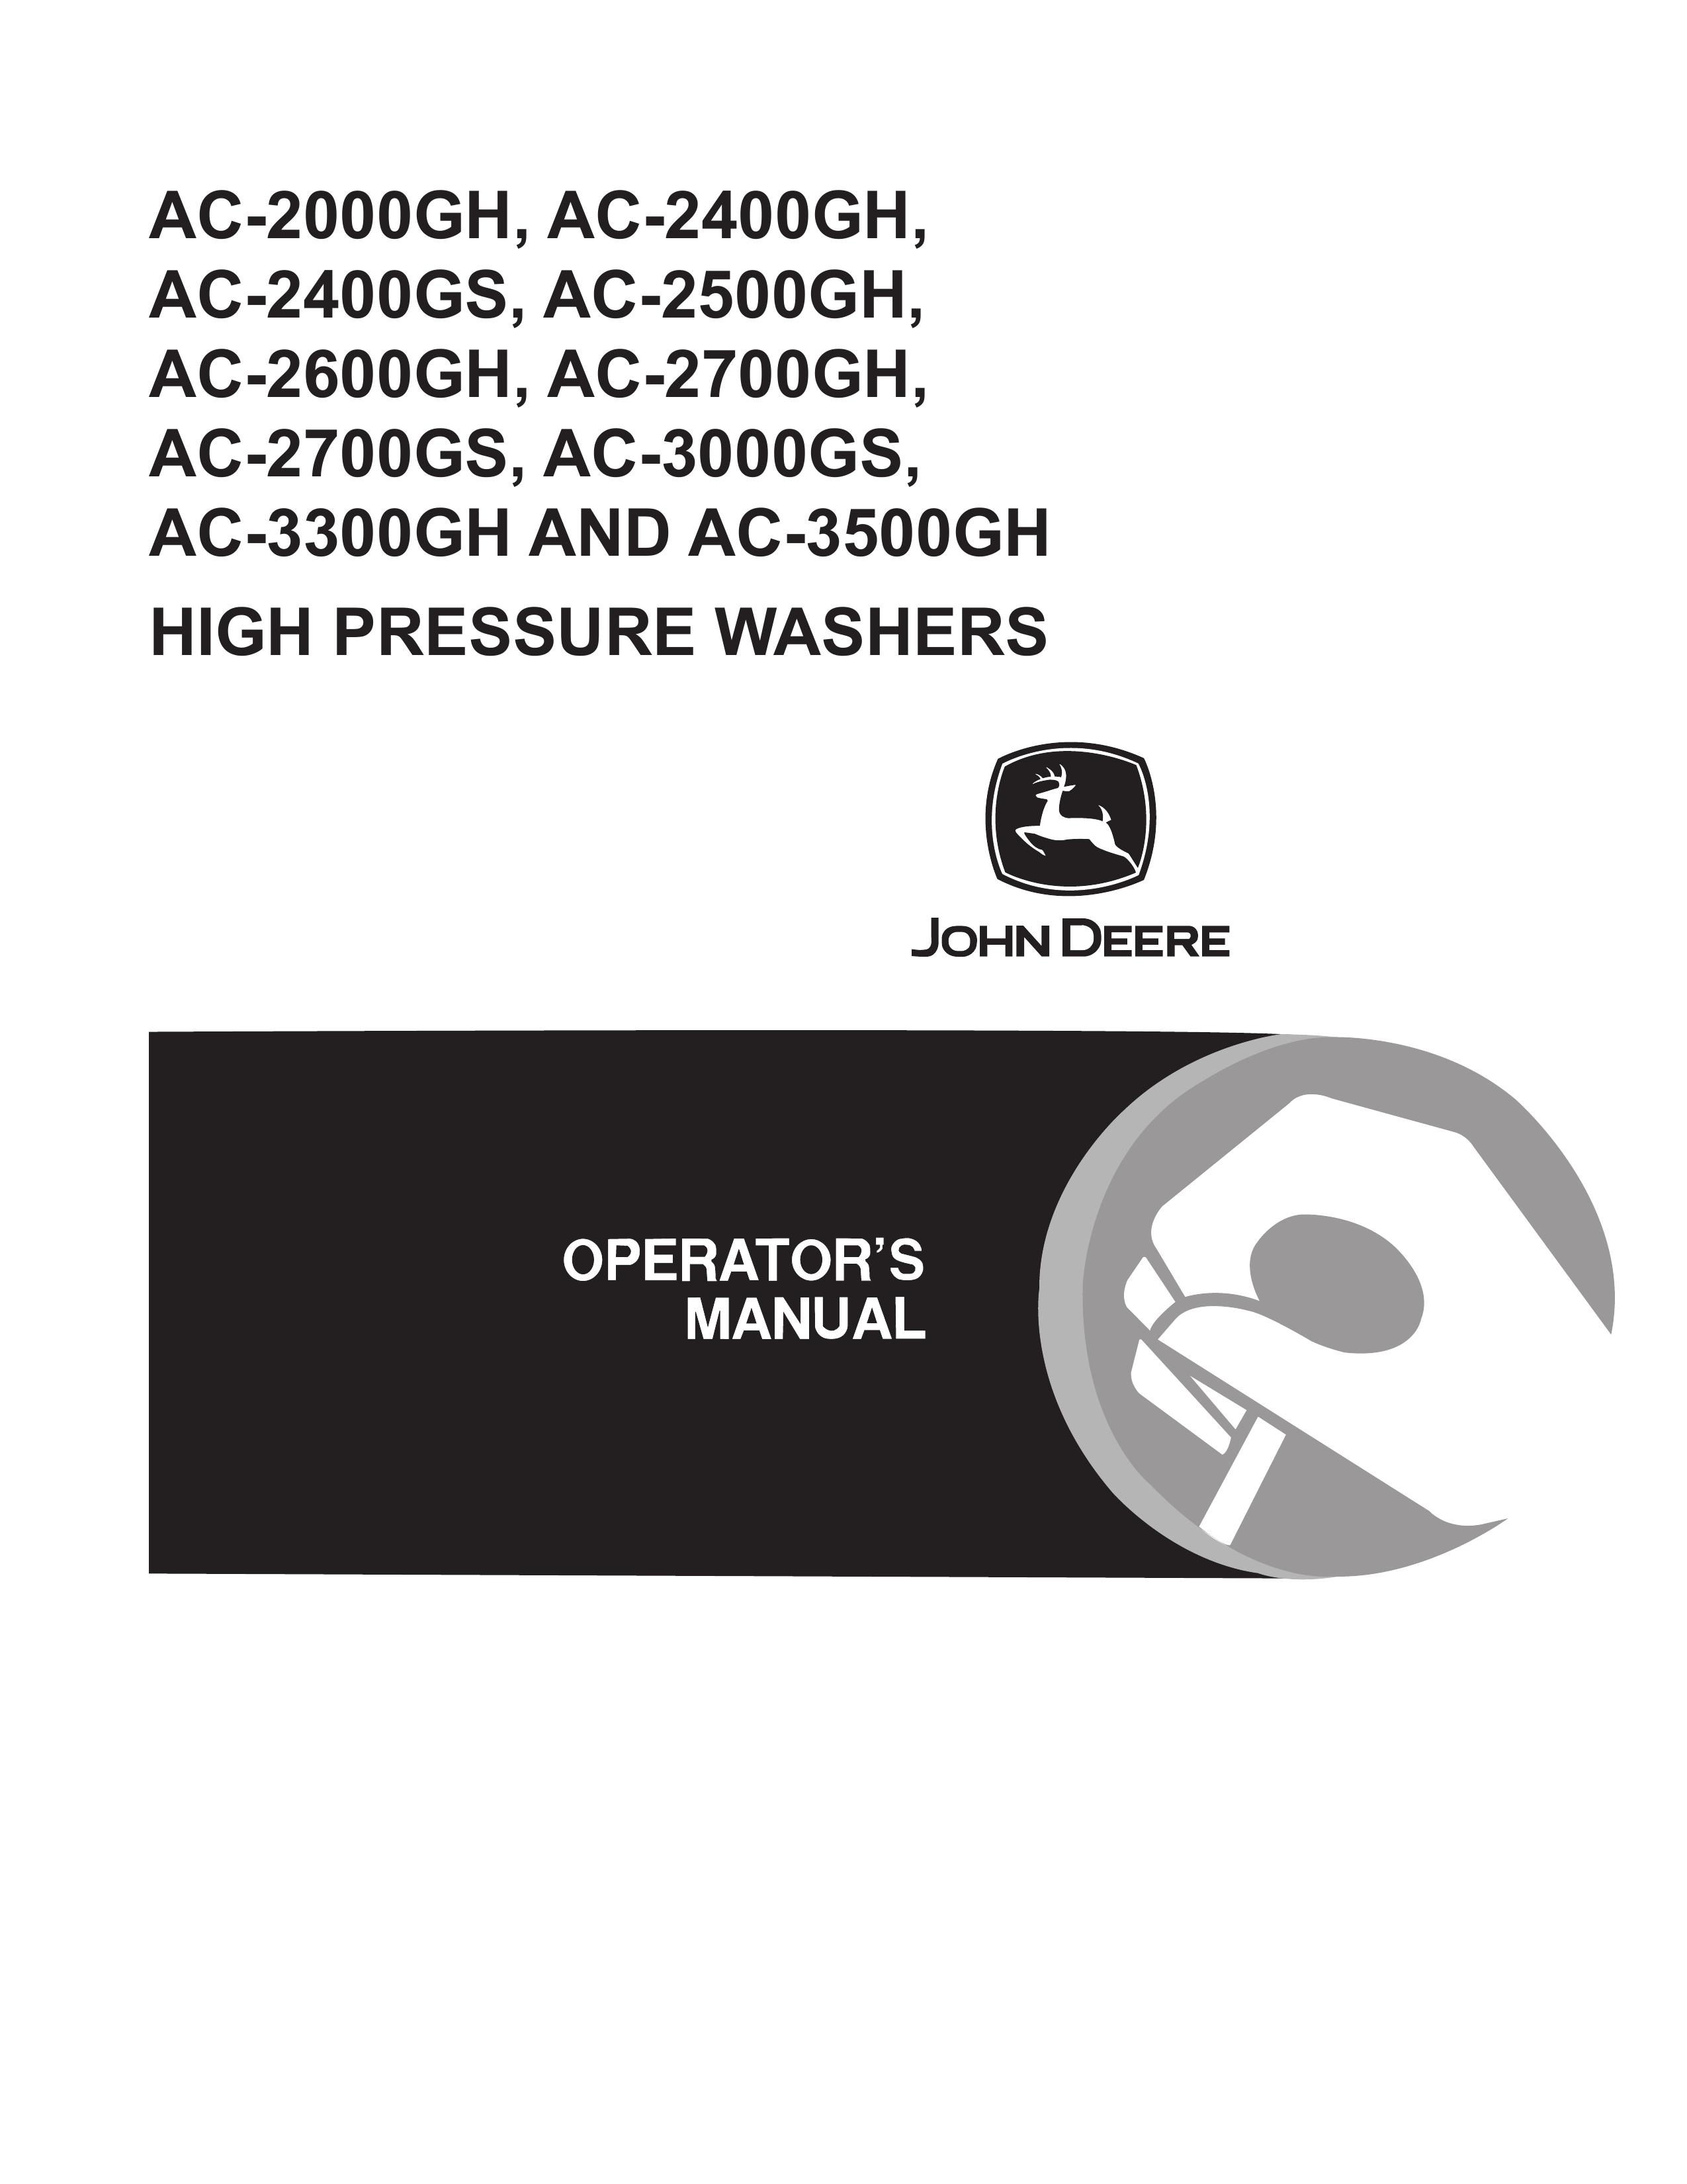 John Deere AC-2500GH Washer User Manual